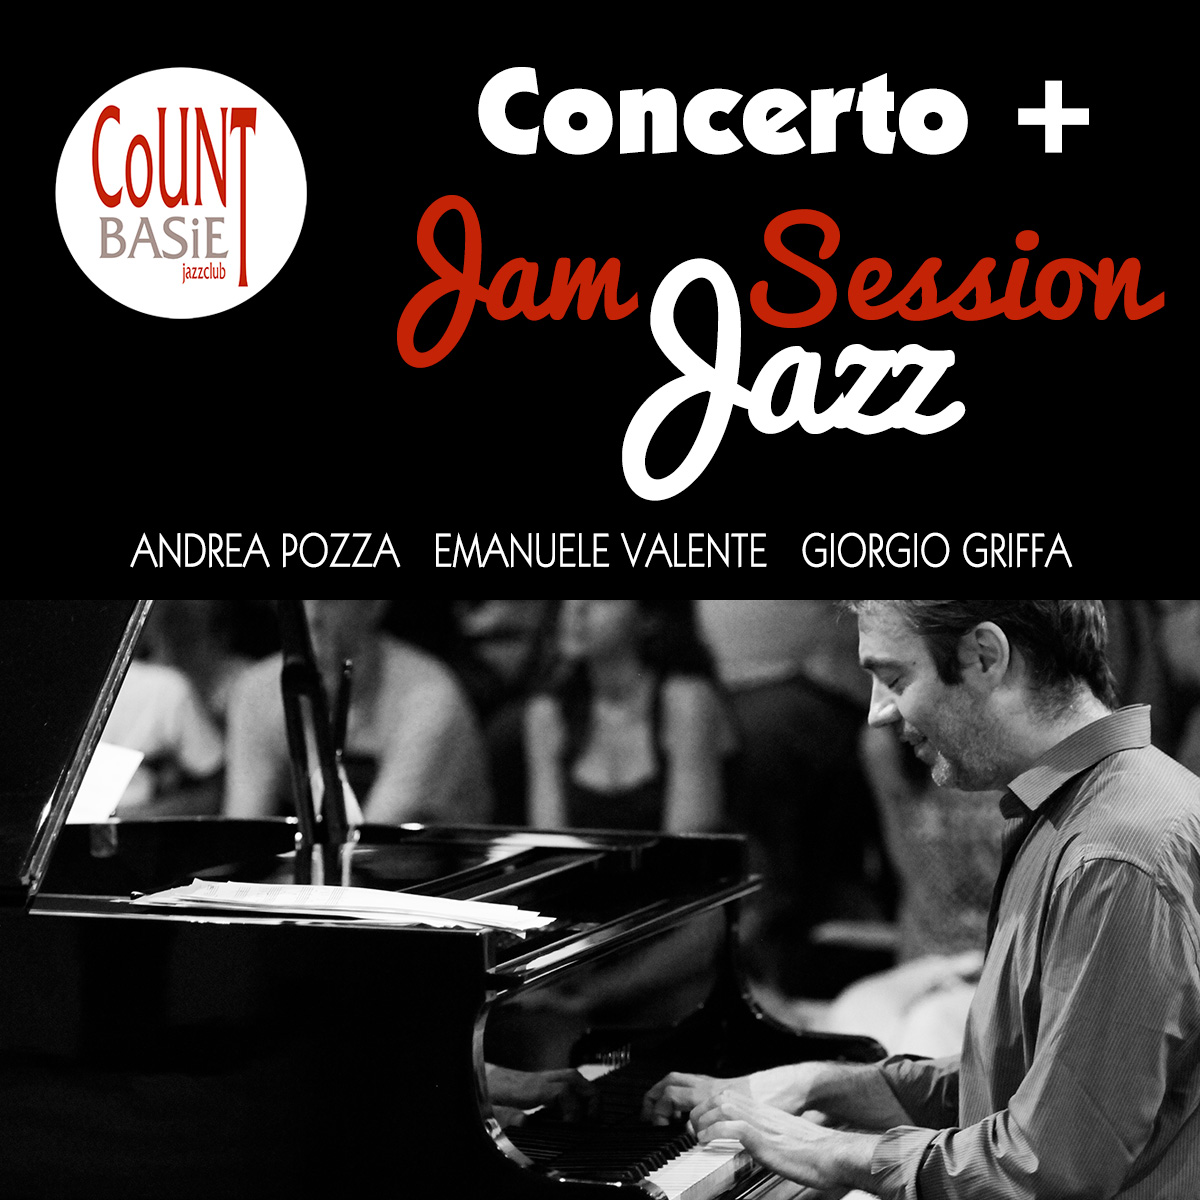 Concerto + Jam Session Jazz